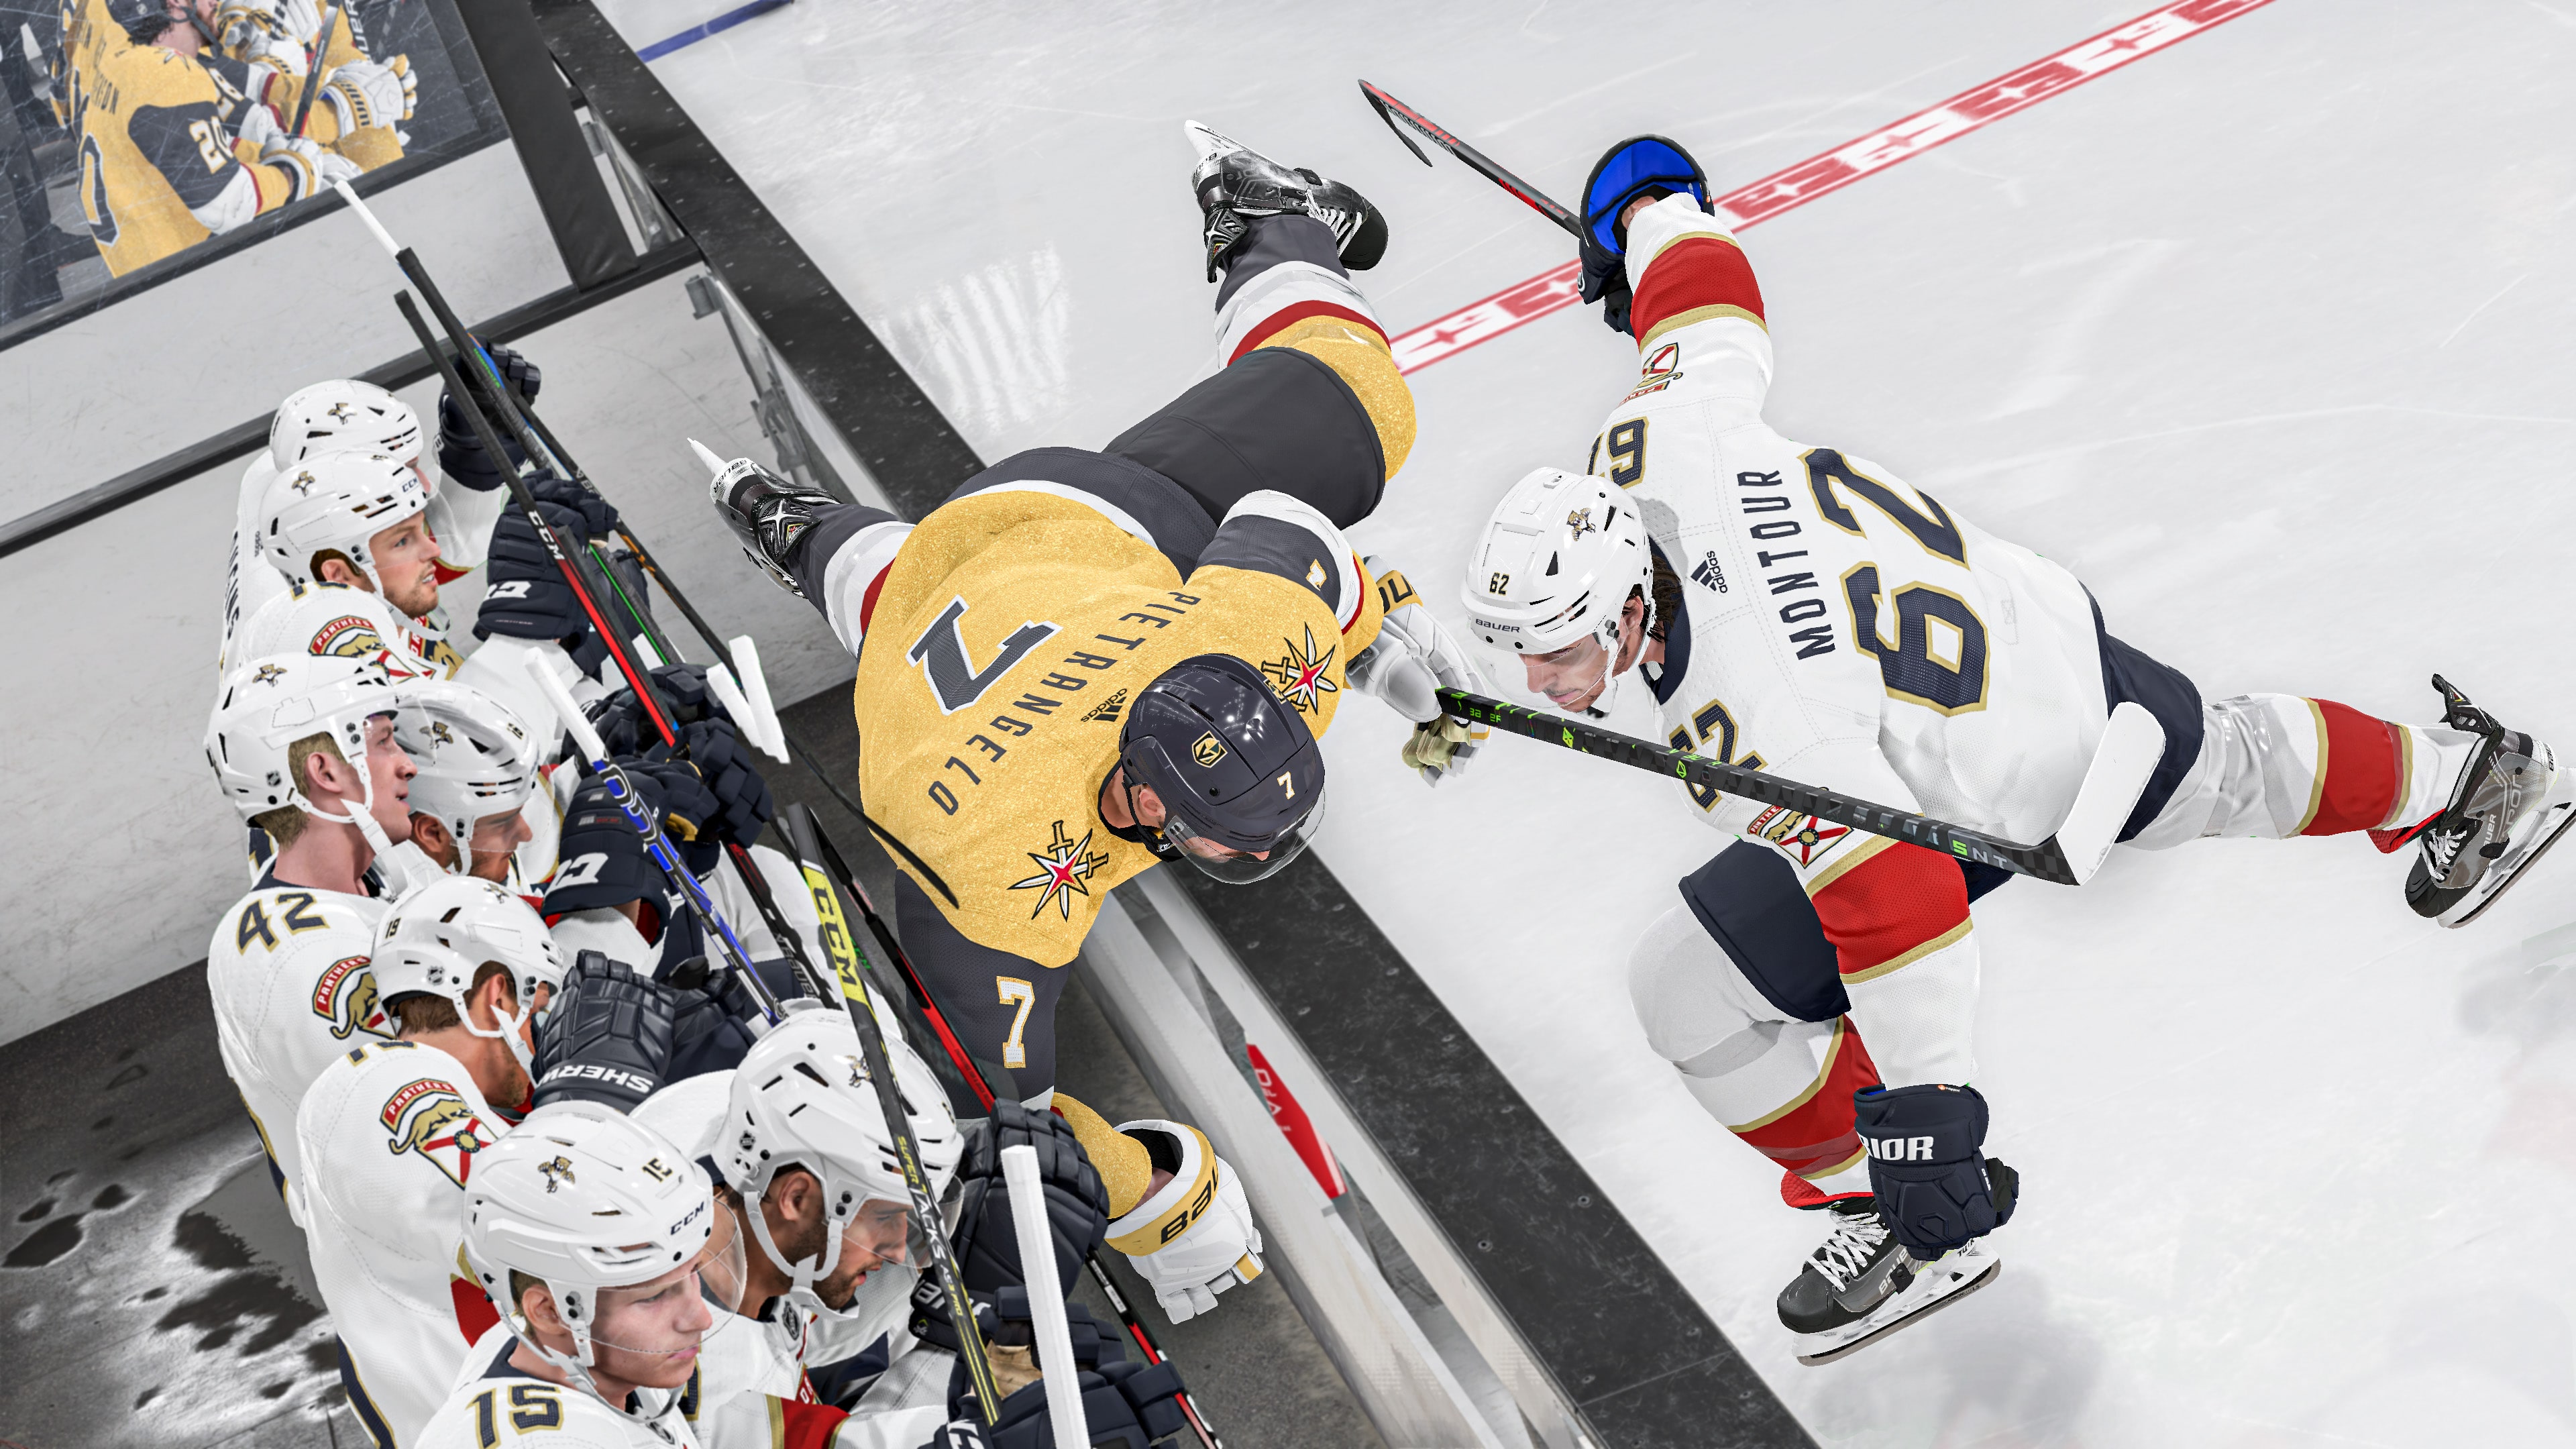 NHL 23, Electronic Arts, Playstation 4 